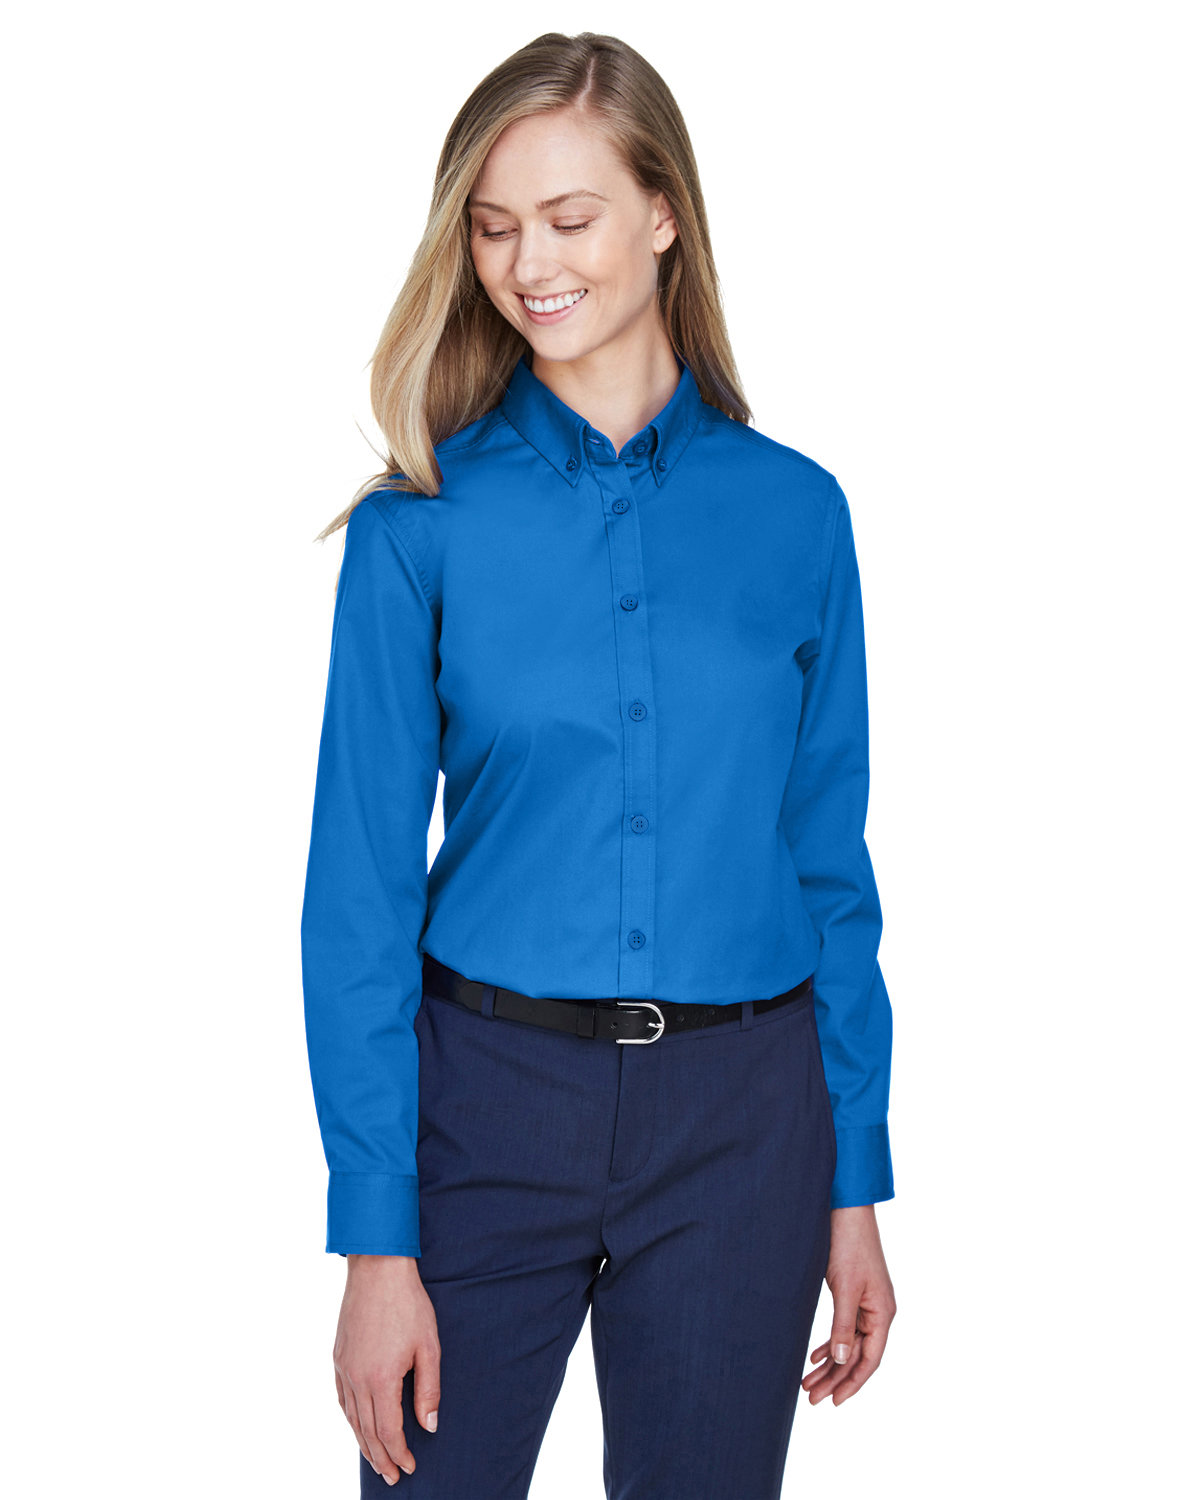 Core 365 78193 - Ladies' Operate Long-Sleeve Twill Shirt